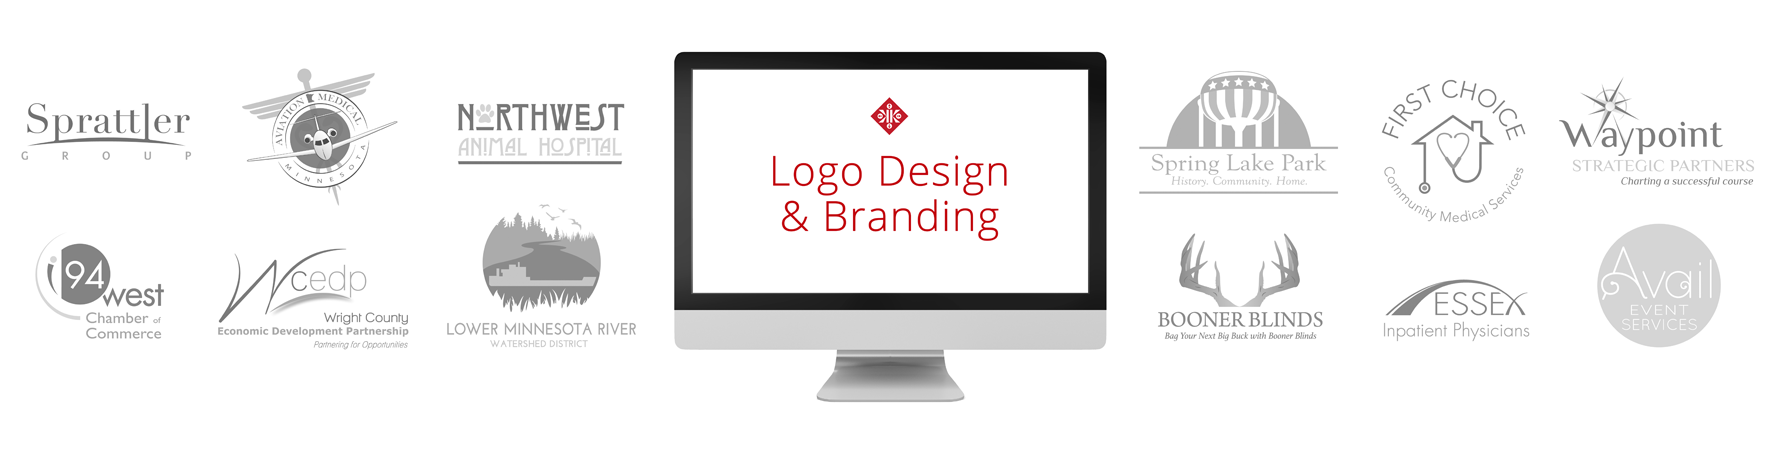 Kaul Design Group - Logo Design